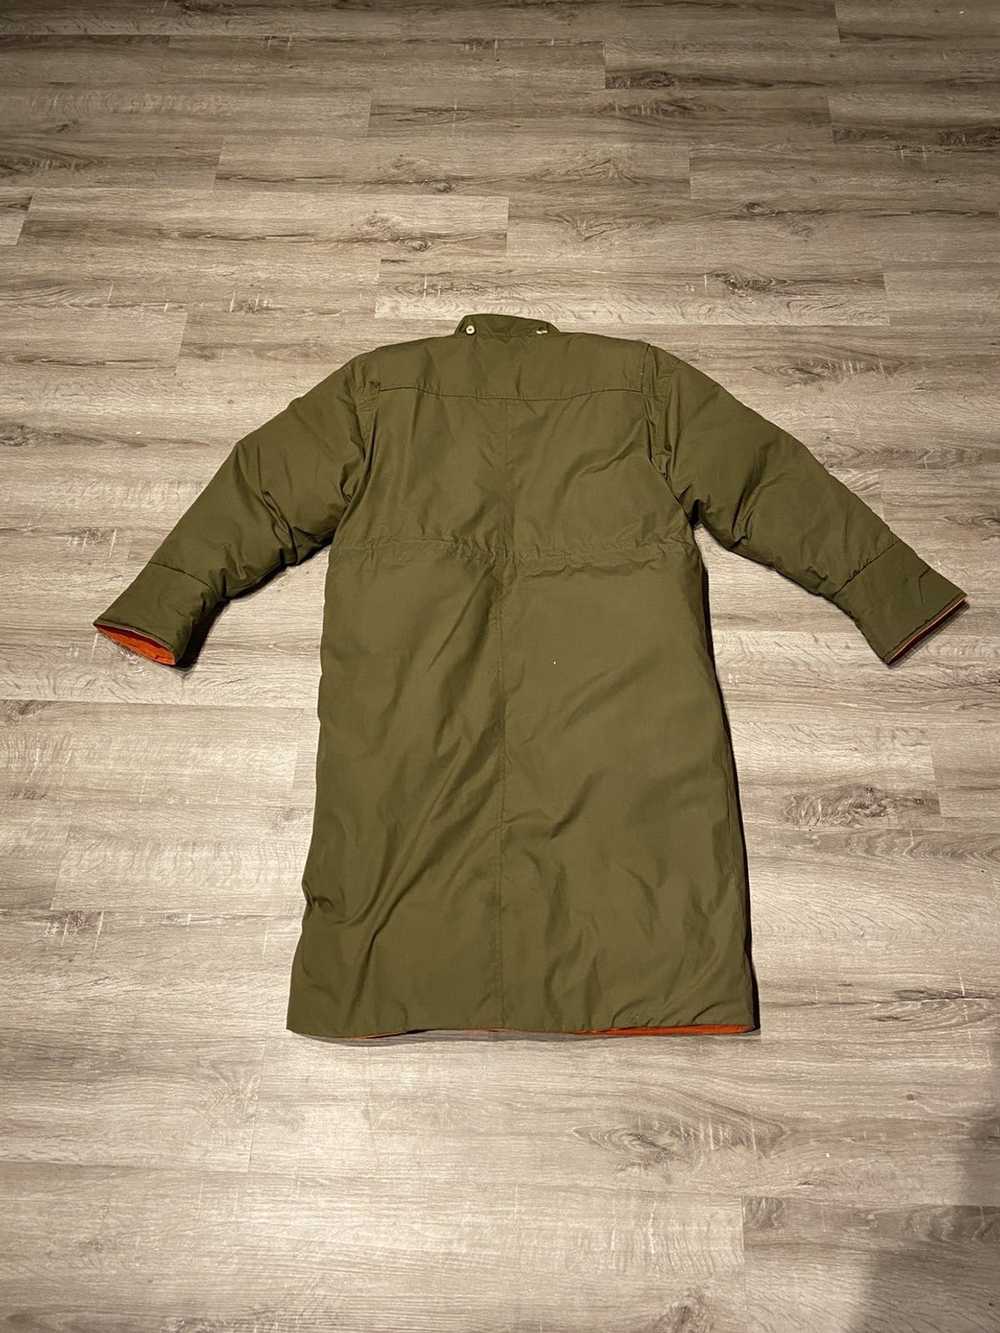 Neiman Marcus Neiman Marcus puffer trench coat - image 4